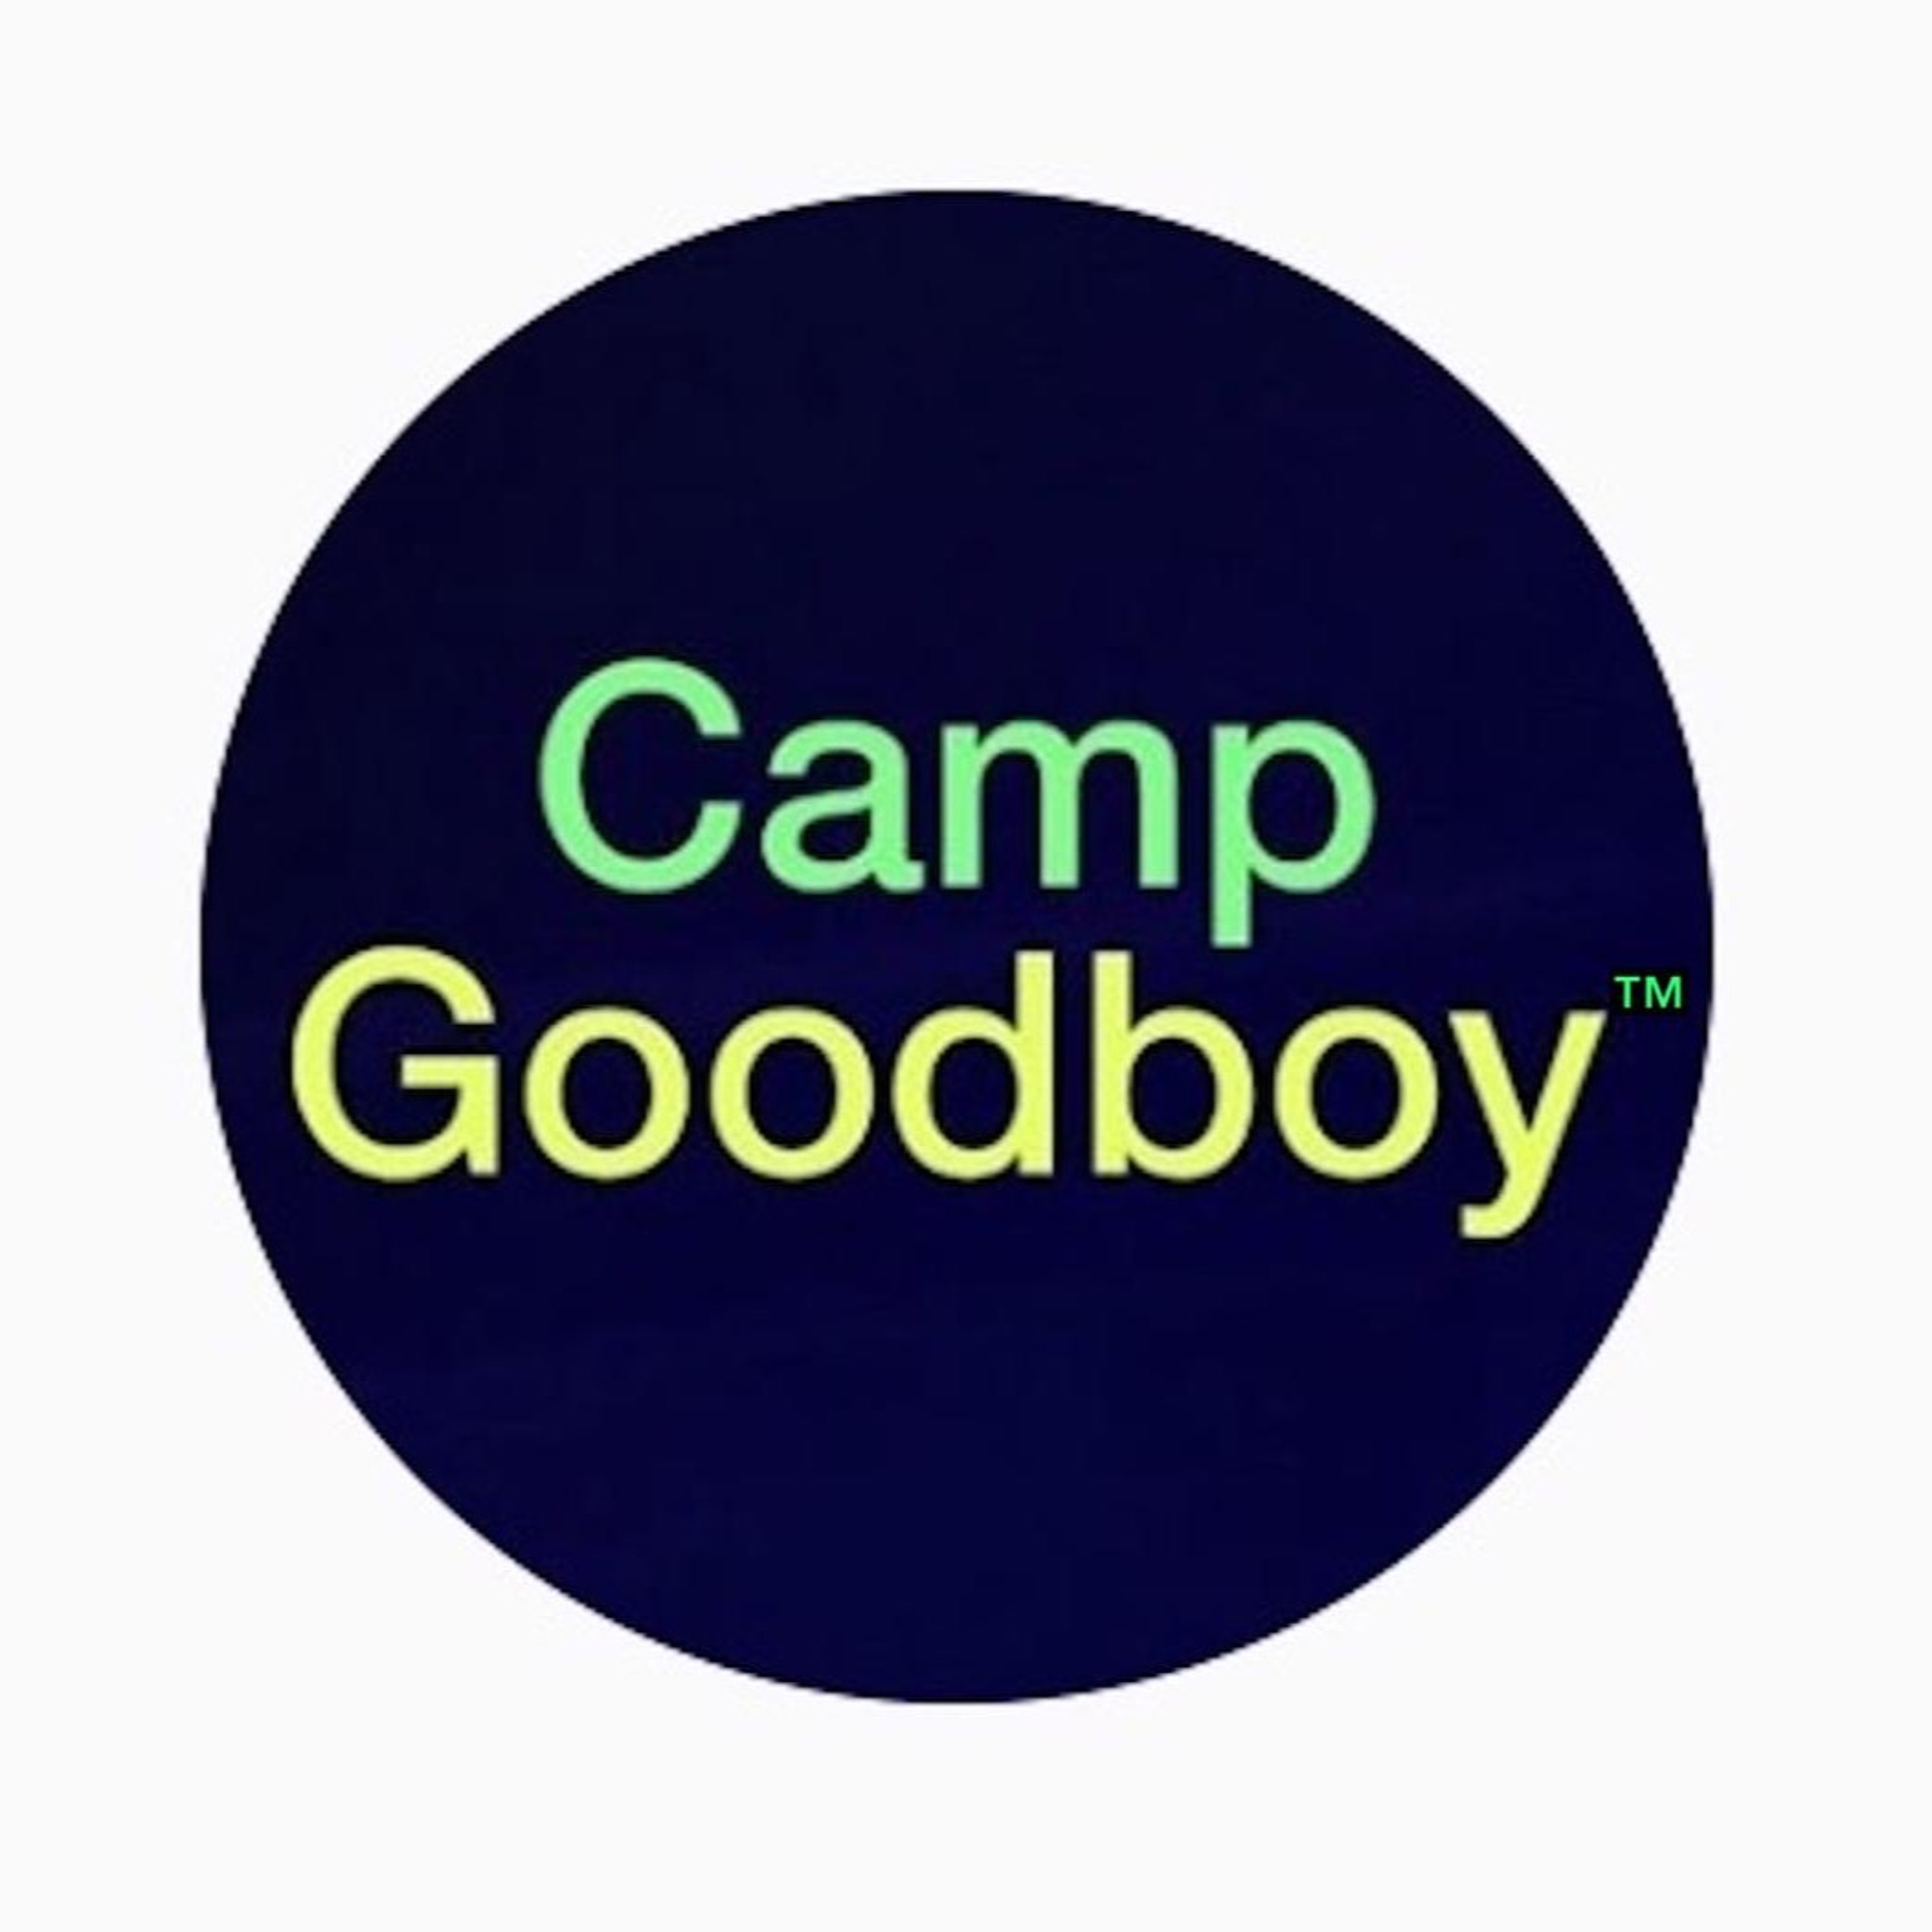 Episode 155: Camp is open!